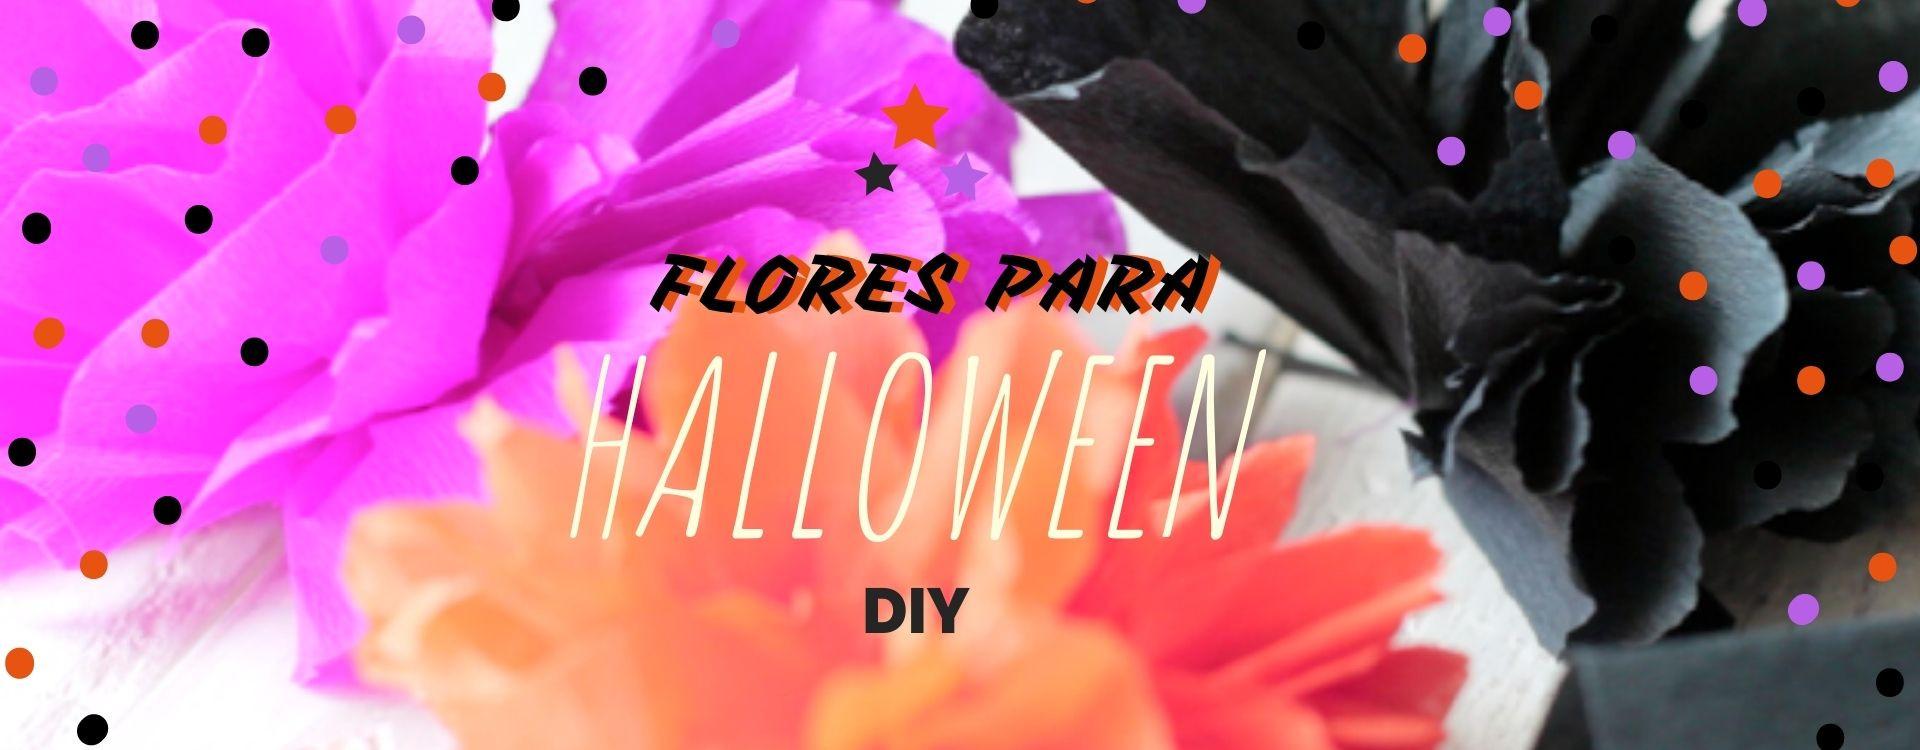 Como Hacer Flores de Papel para Halloween 21/10/2016